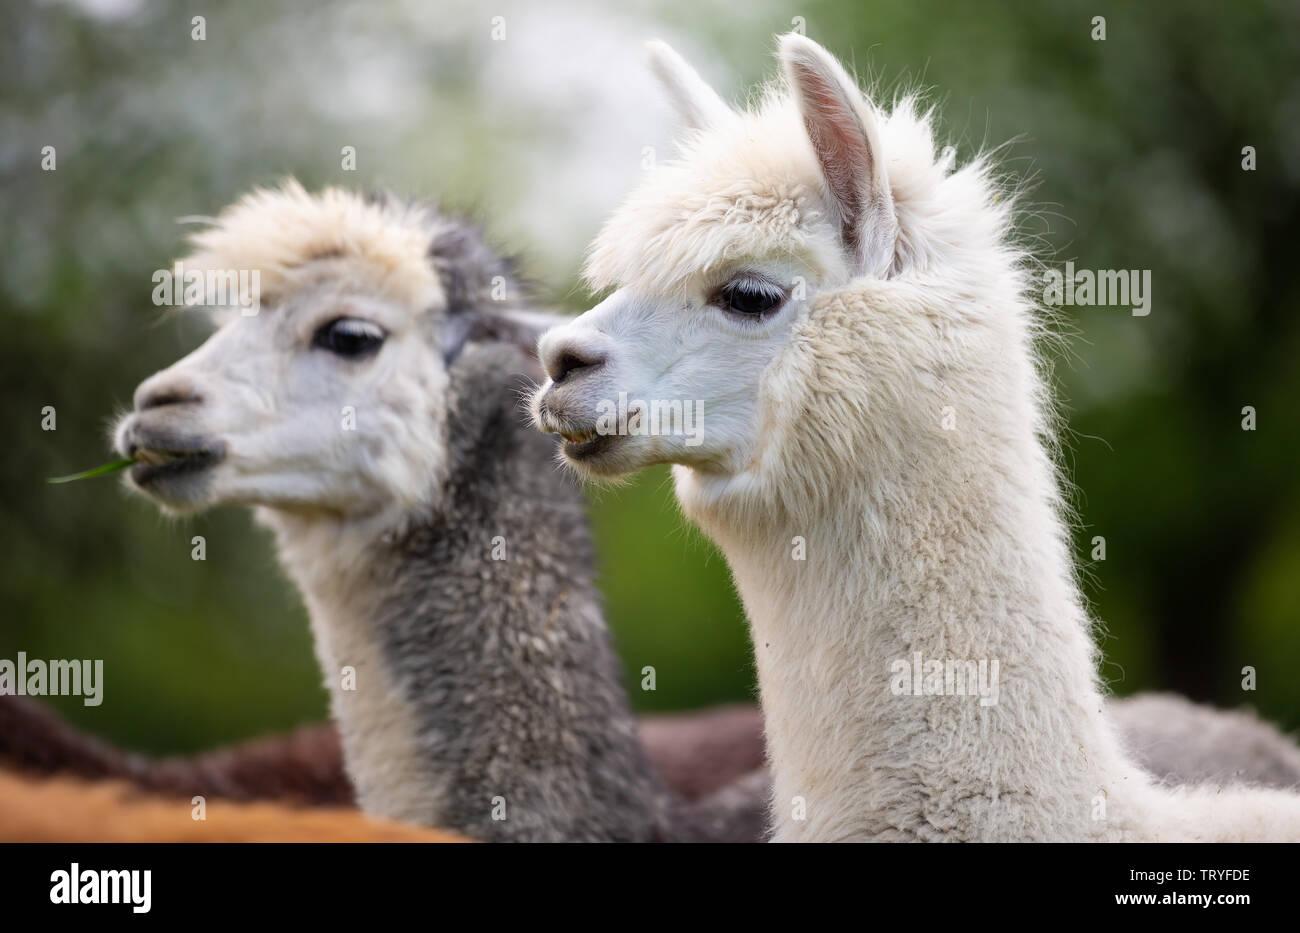 Portrait of two Alpacas, South American mammals Stock Photo